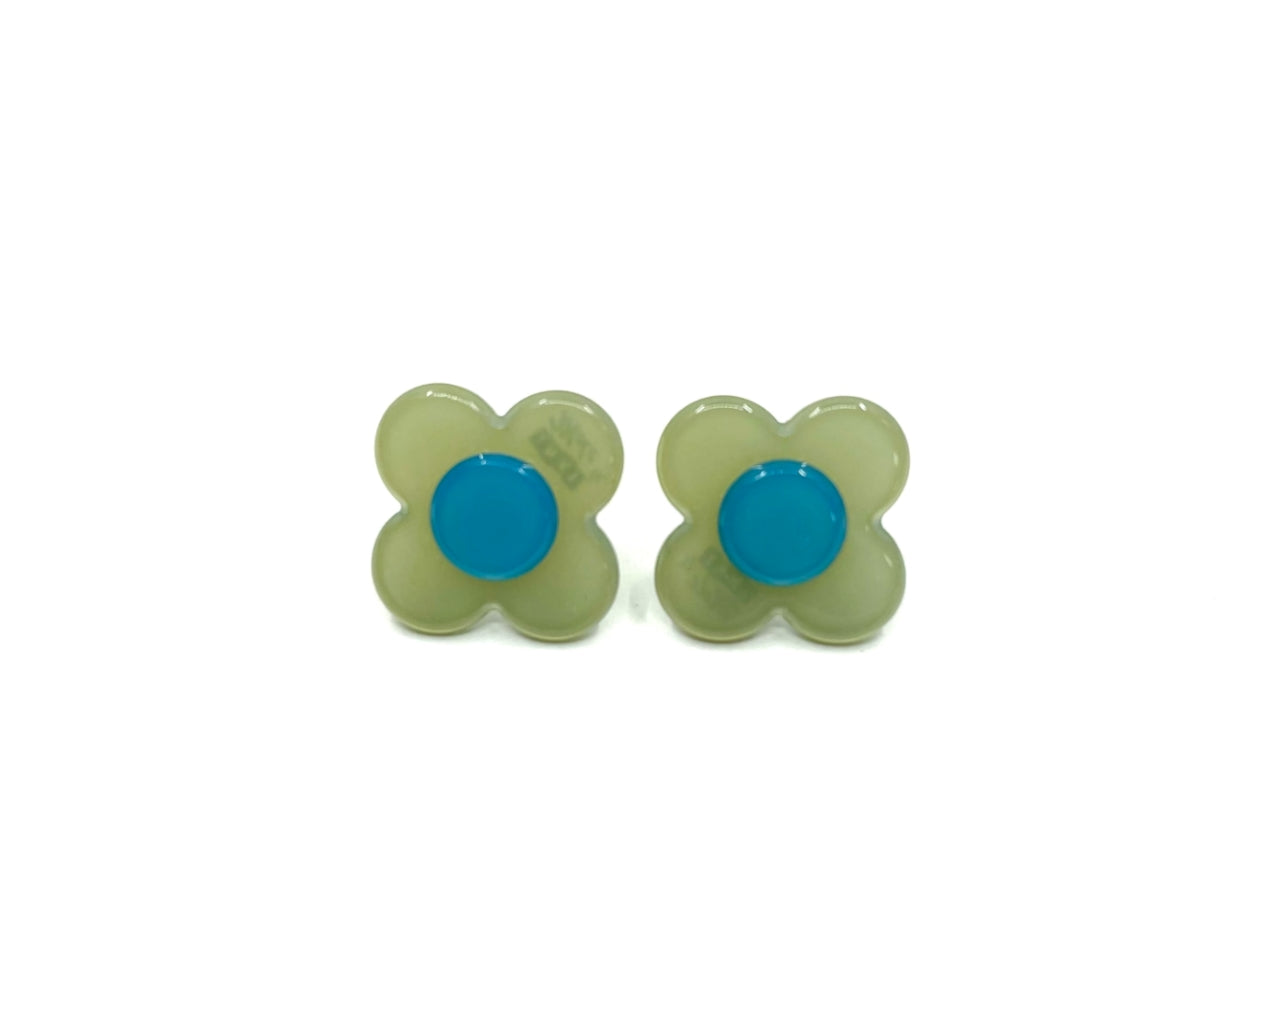 Hanover Earrings - Sagey Green / Blue